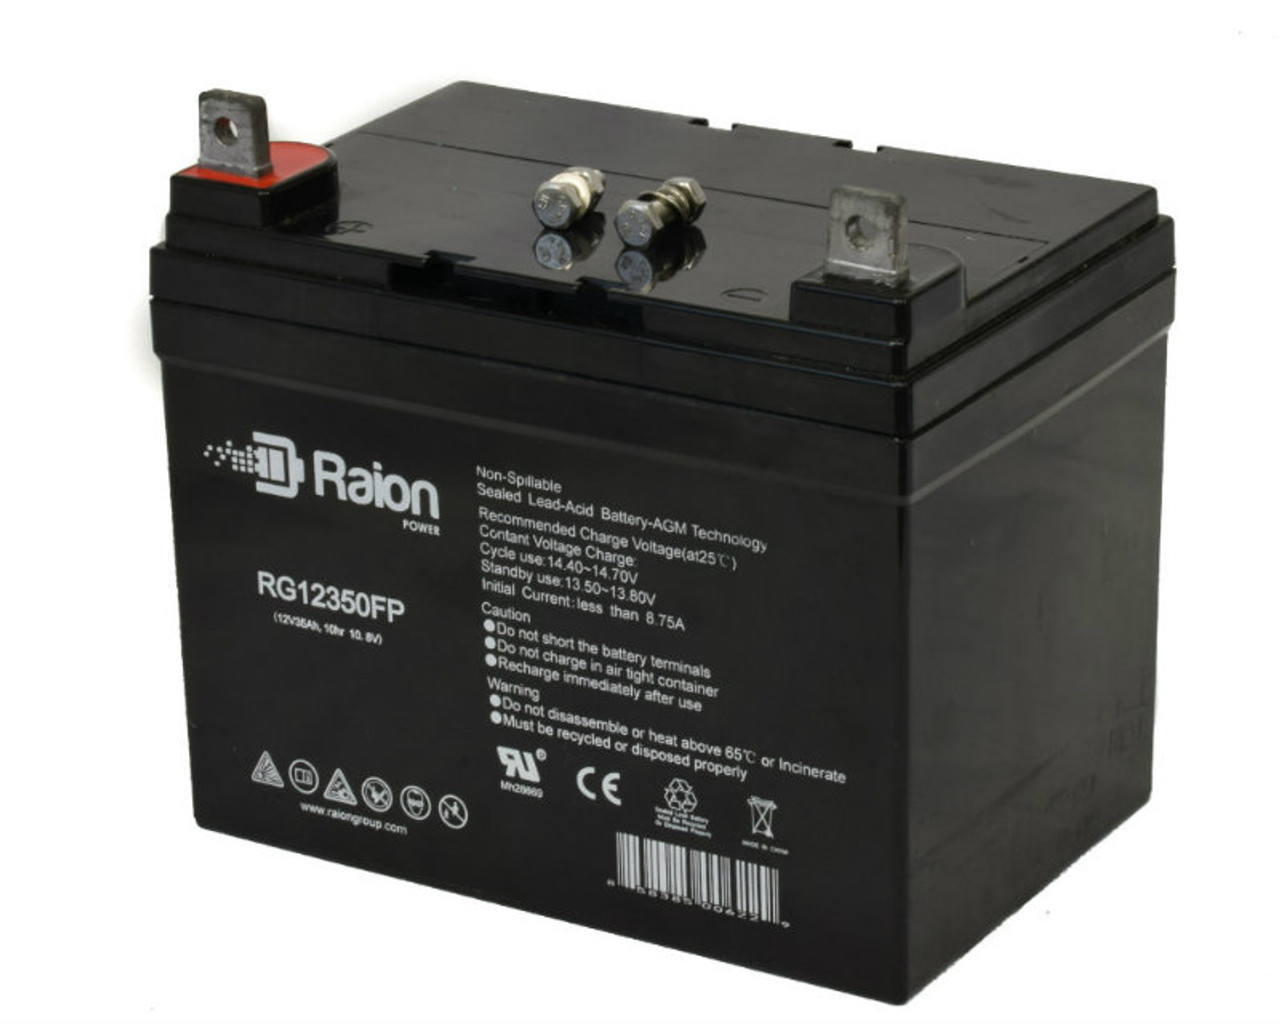 Raion Power Replacement 12V 35Ah RG12350FP Battery for Honda Harmony 1011